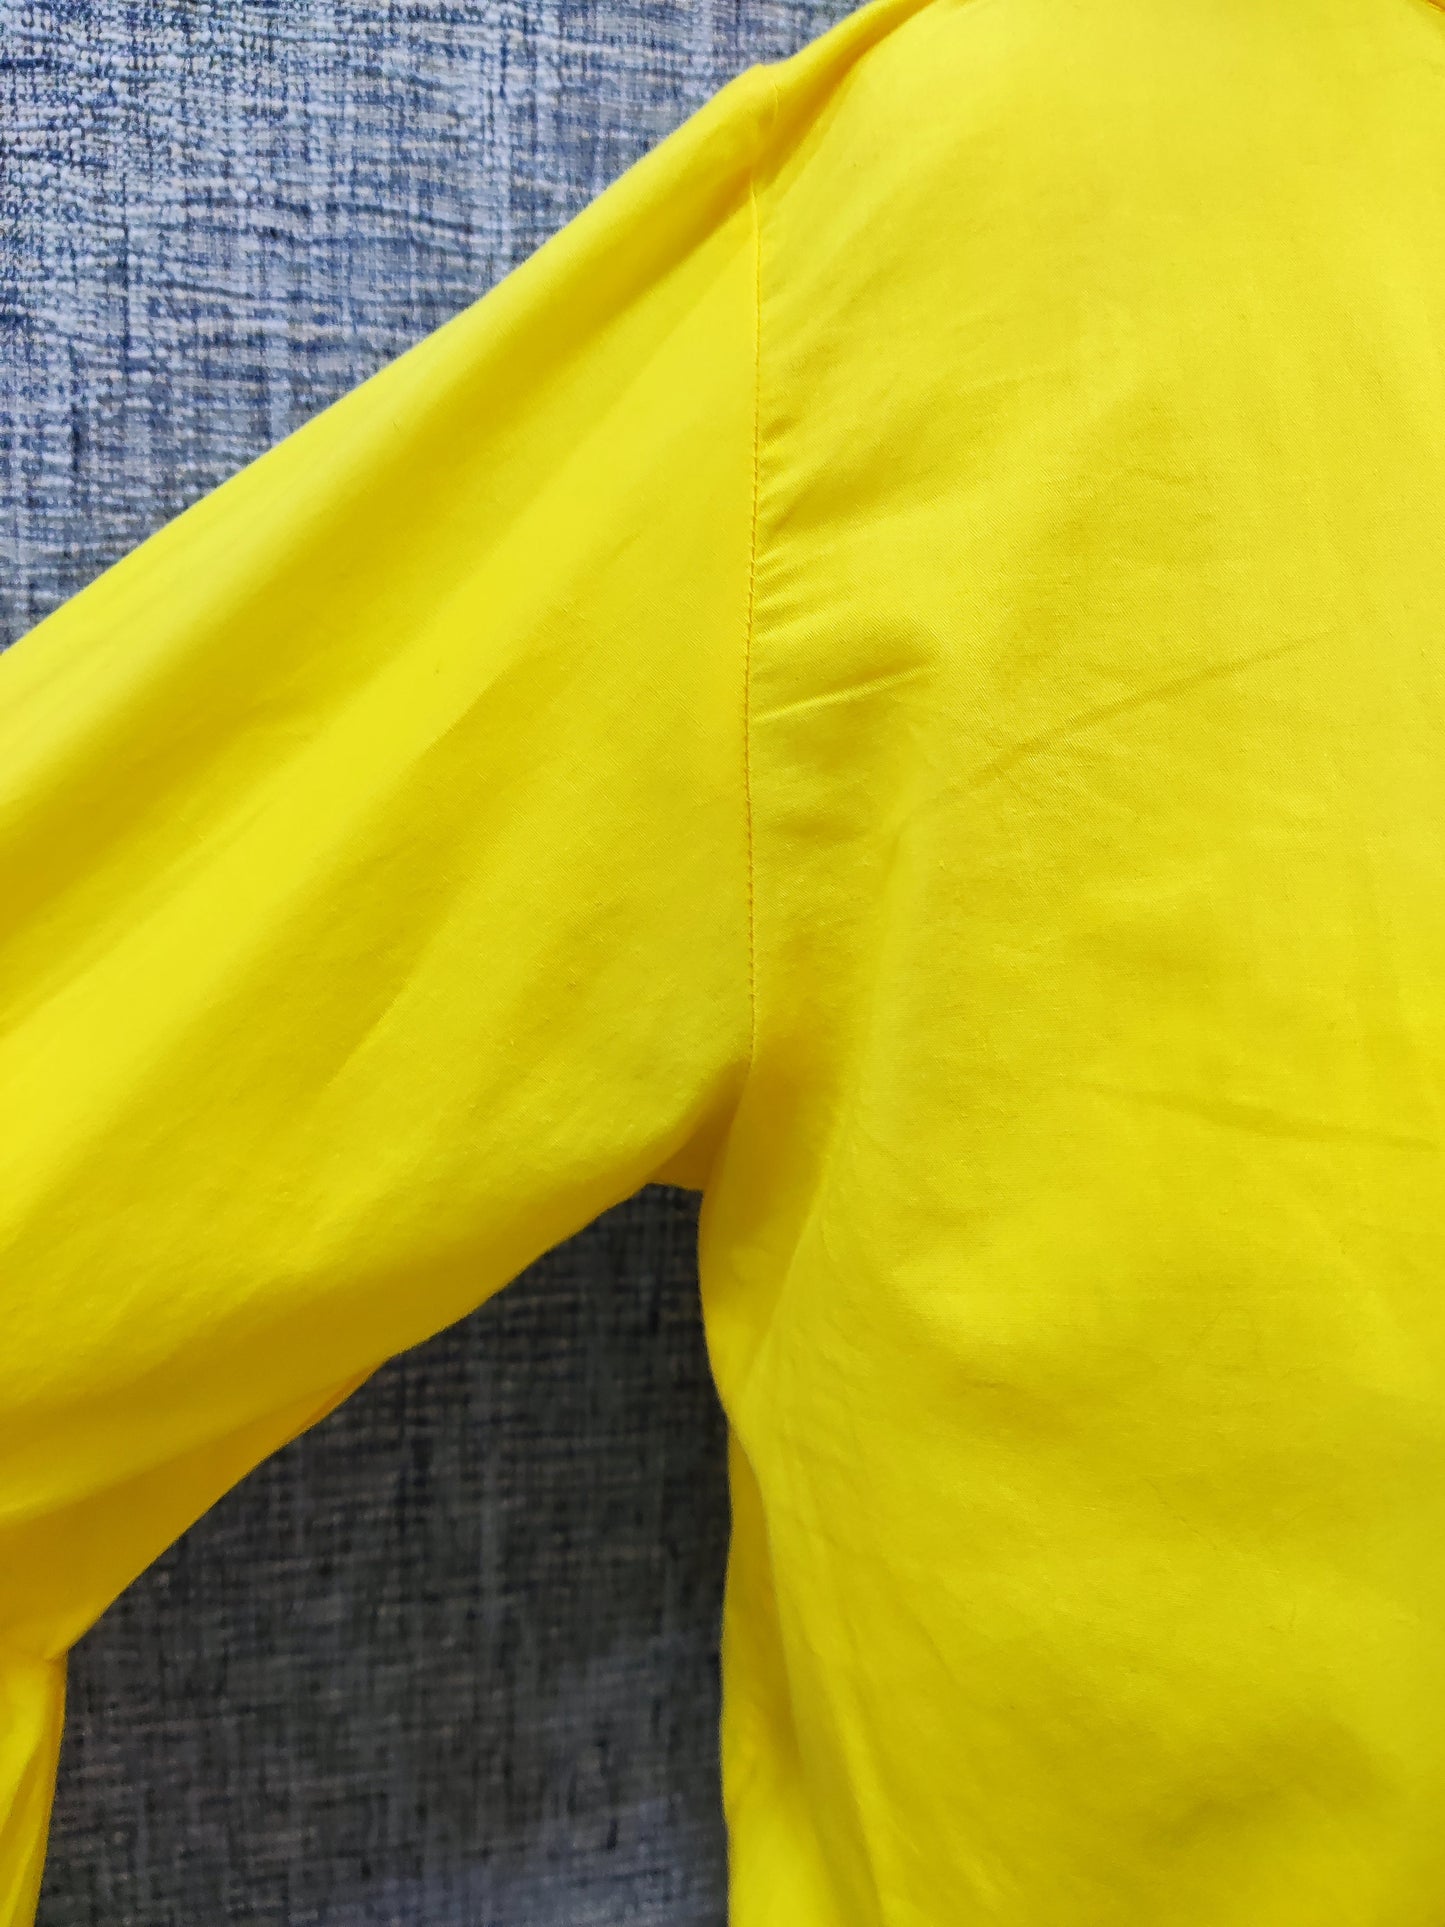 Zara Yellow Long Sleeves Top | Relove